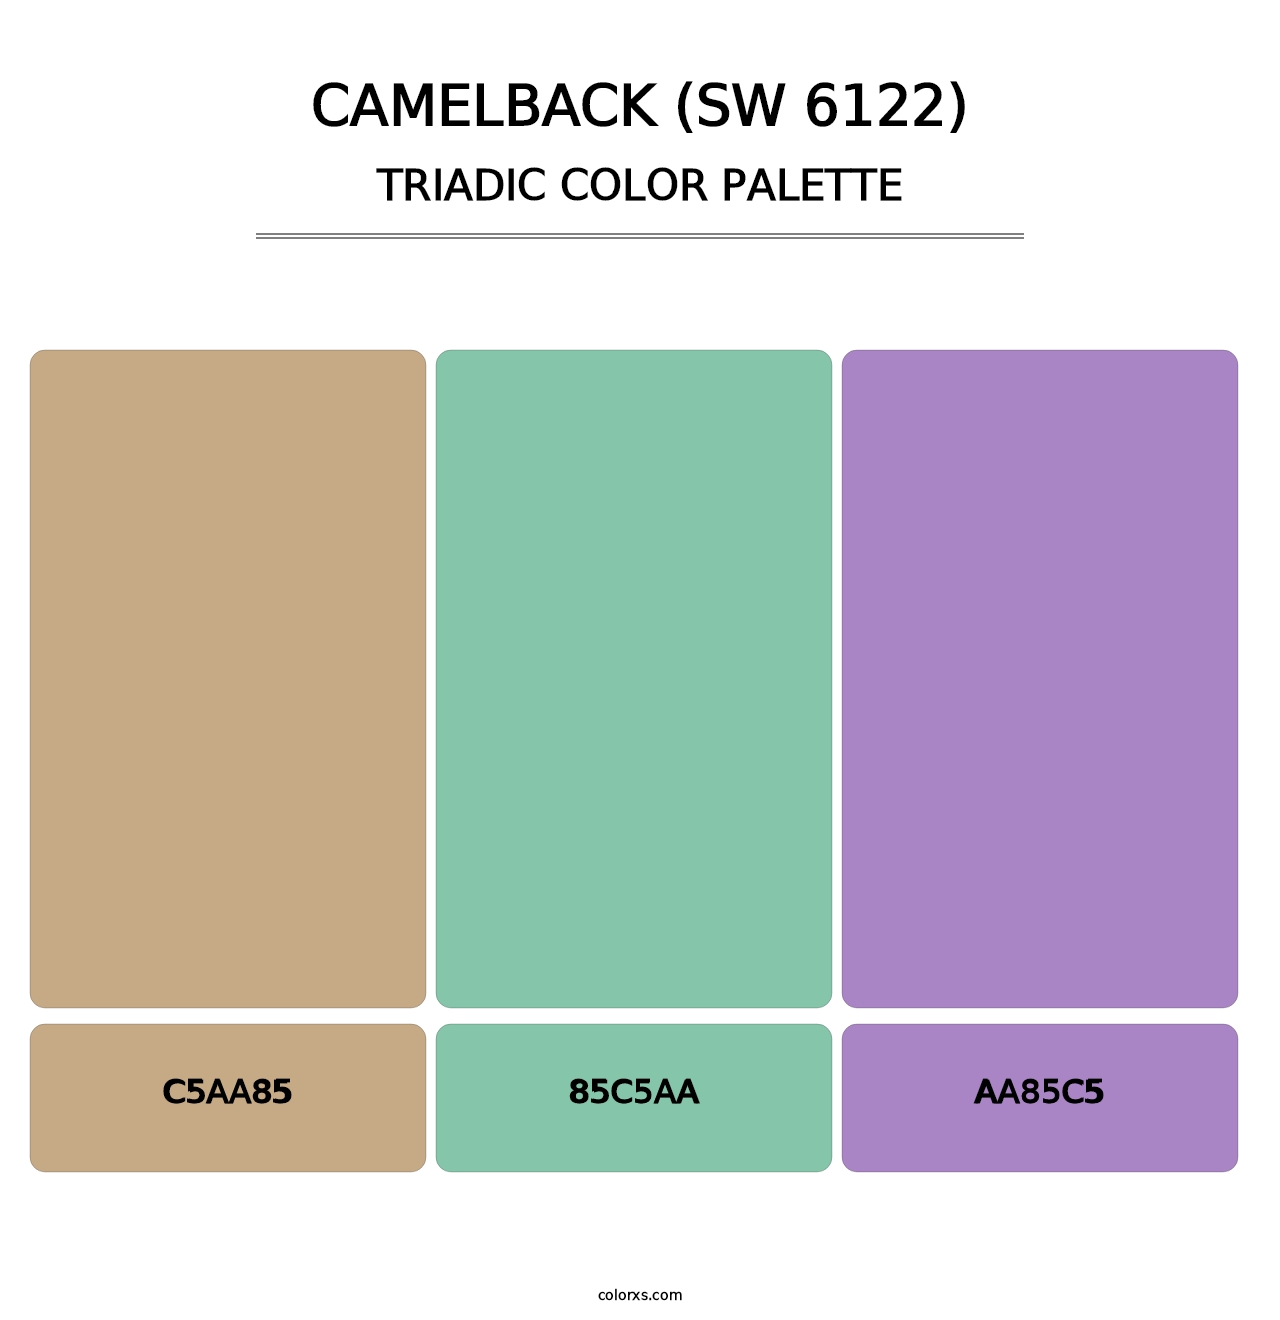 Camelback (SW 6122) - Triadic Color Palette